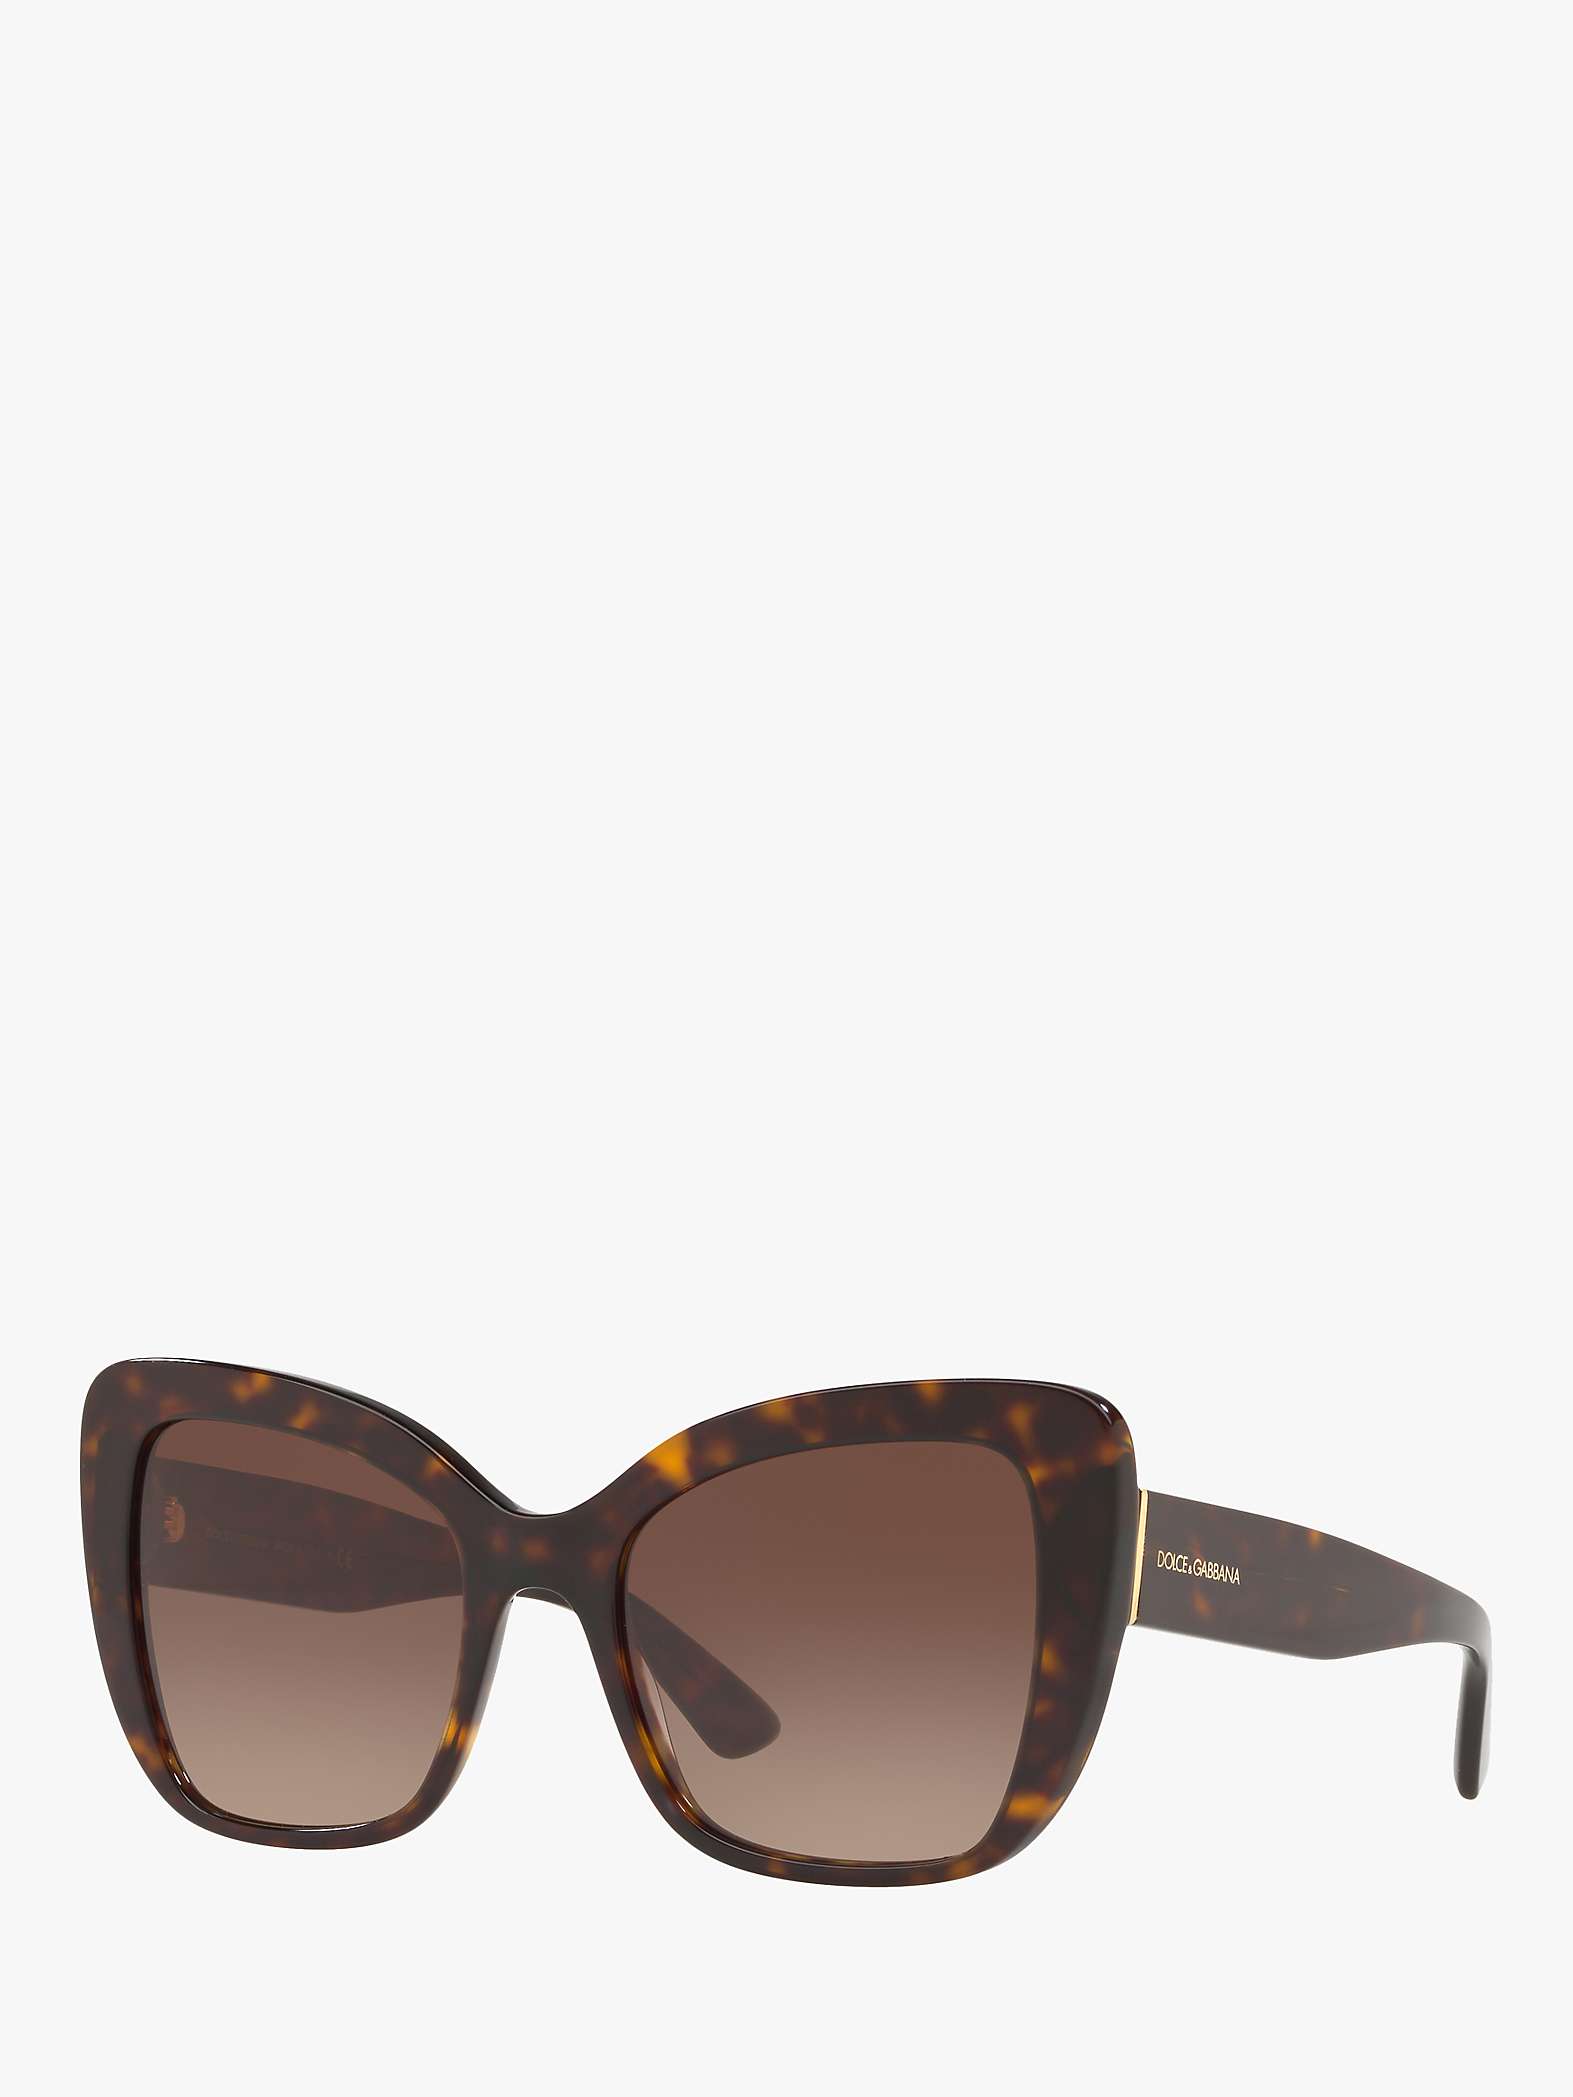 Dolce & Gabbana DG4348 Women's Cat's Eye Sunglasses, Tortoise/Brown  Gradient at John Lewis & Partners